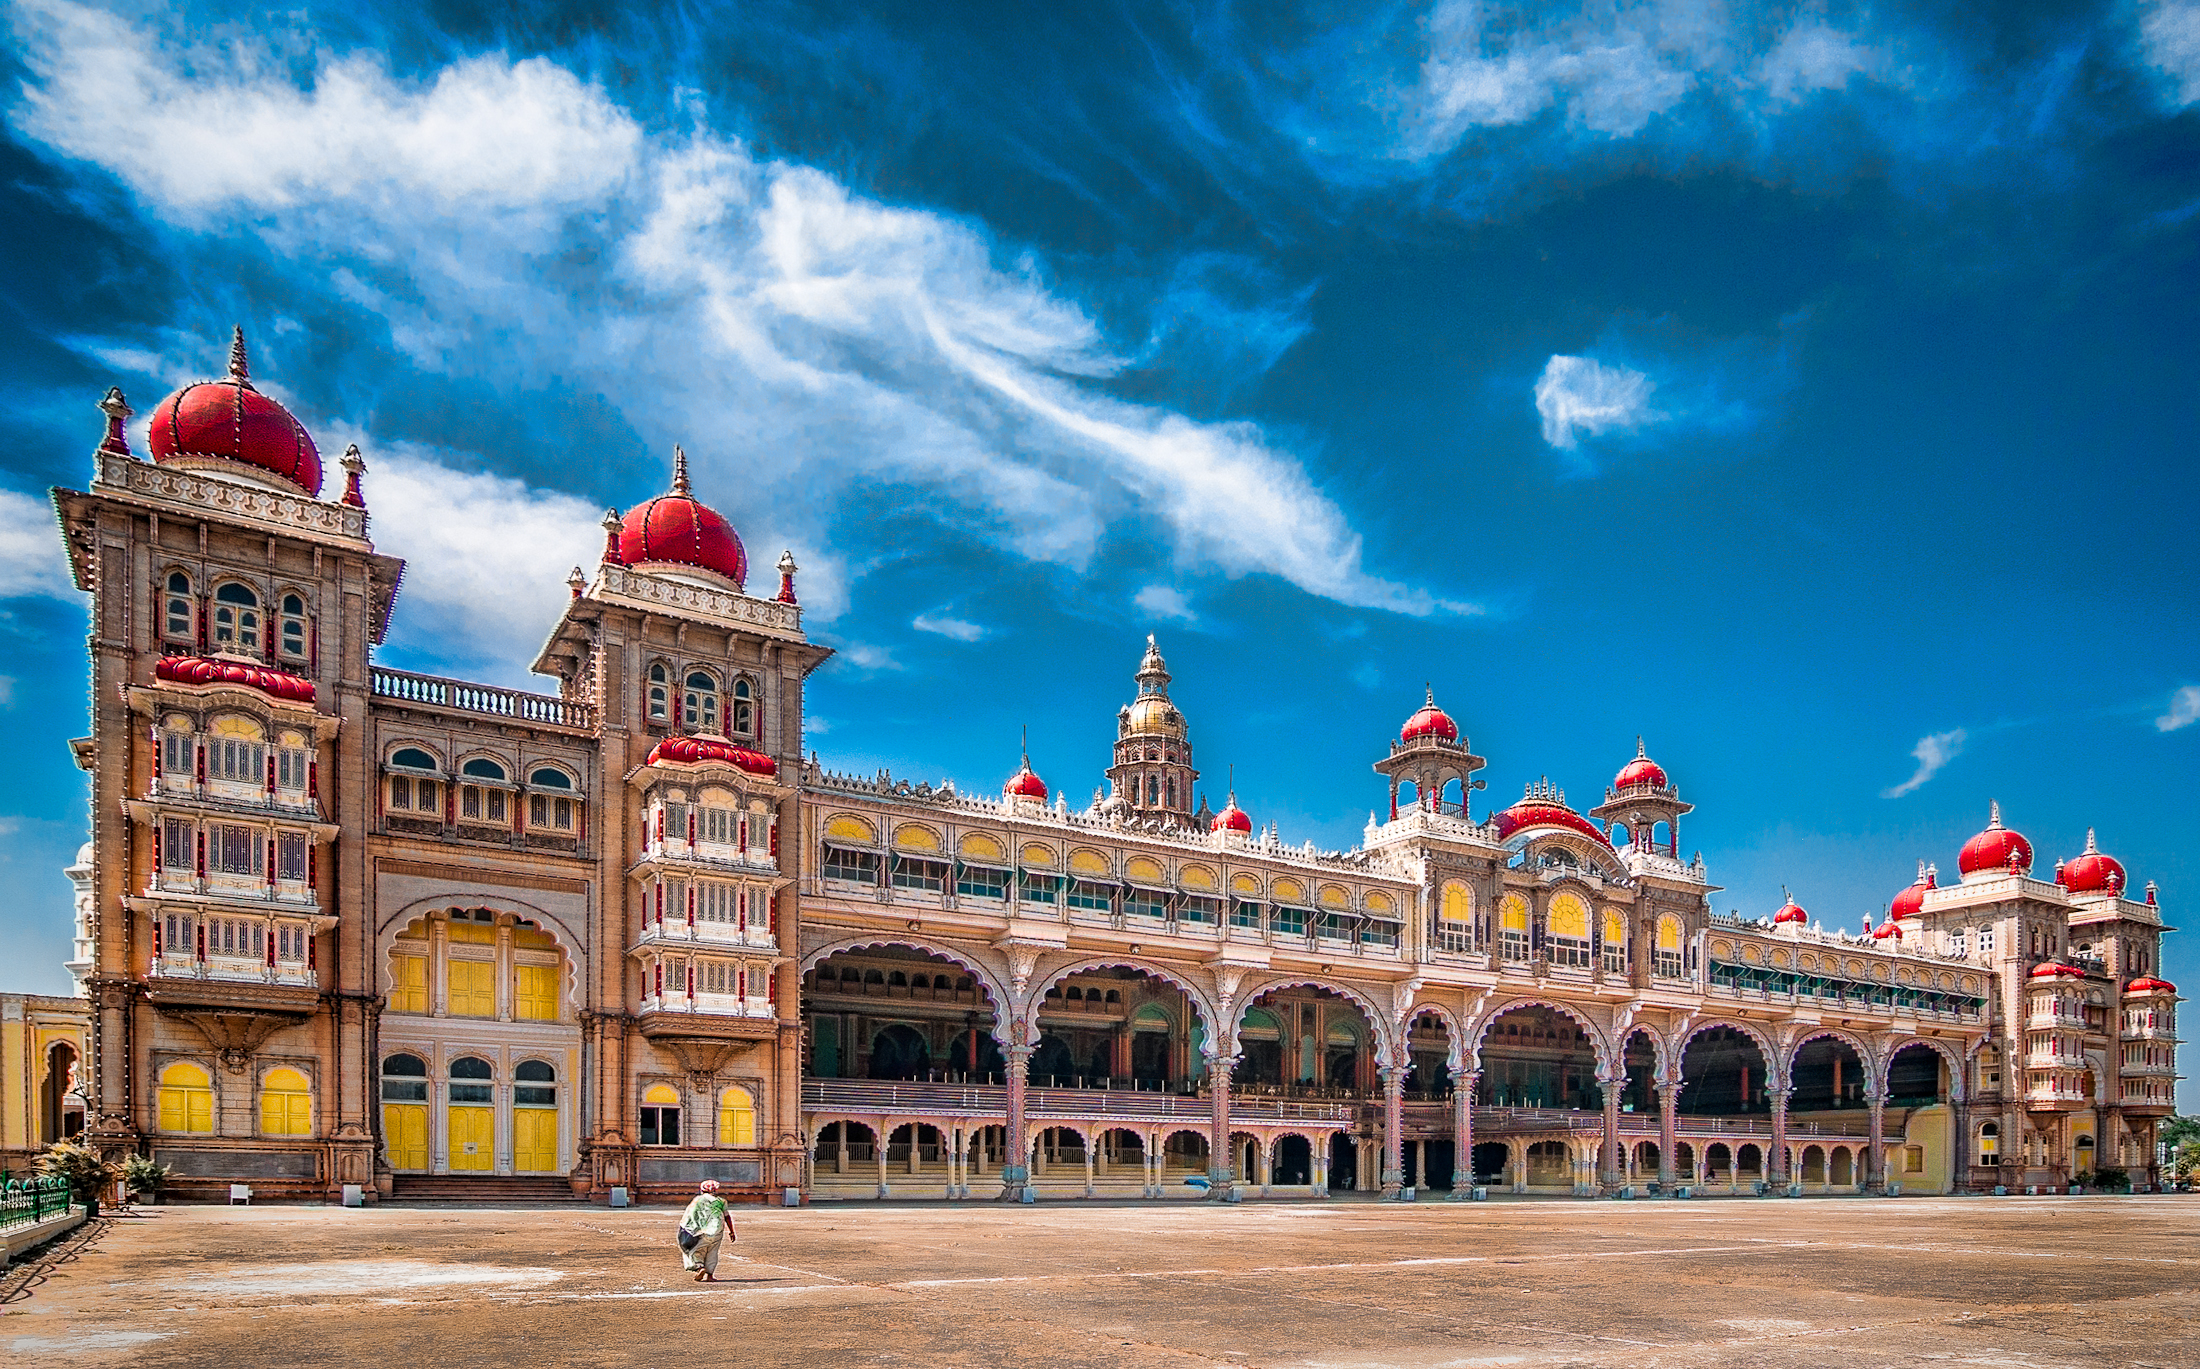 Mysore Palace - India